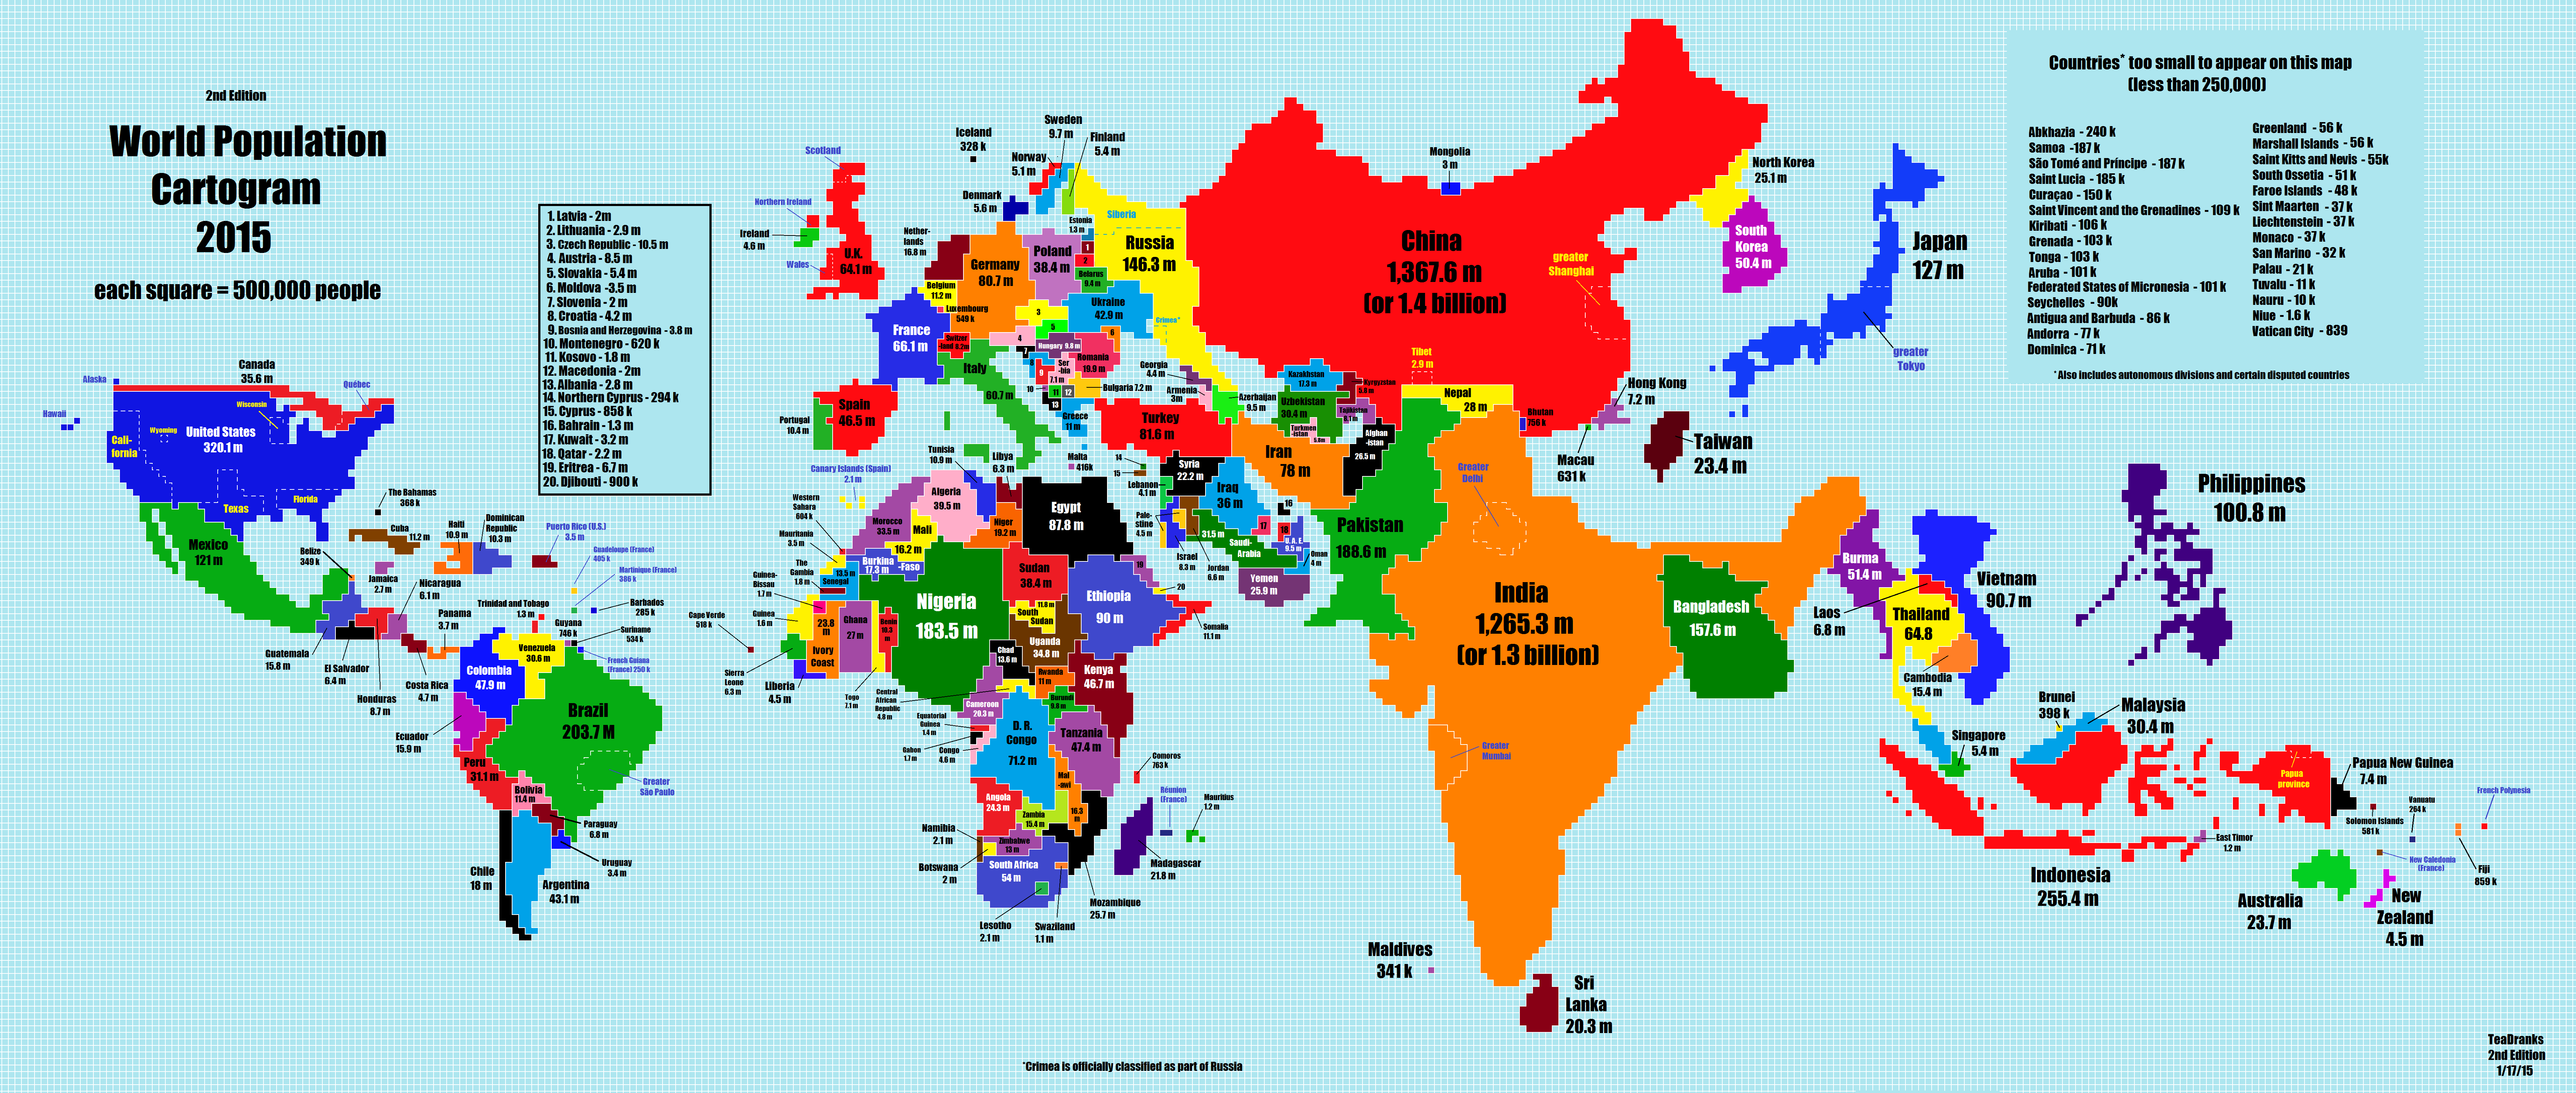 World-Population-Cartogram-2015 Source: WEForum.org http://www.weforum.org/agenda/2016/01/the-map-that-will-change-how-you-see-the-world/?utm_content=buffer41f2d&utm_medium=social&utm_source=twitter.com&utm_campaign=buffer